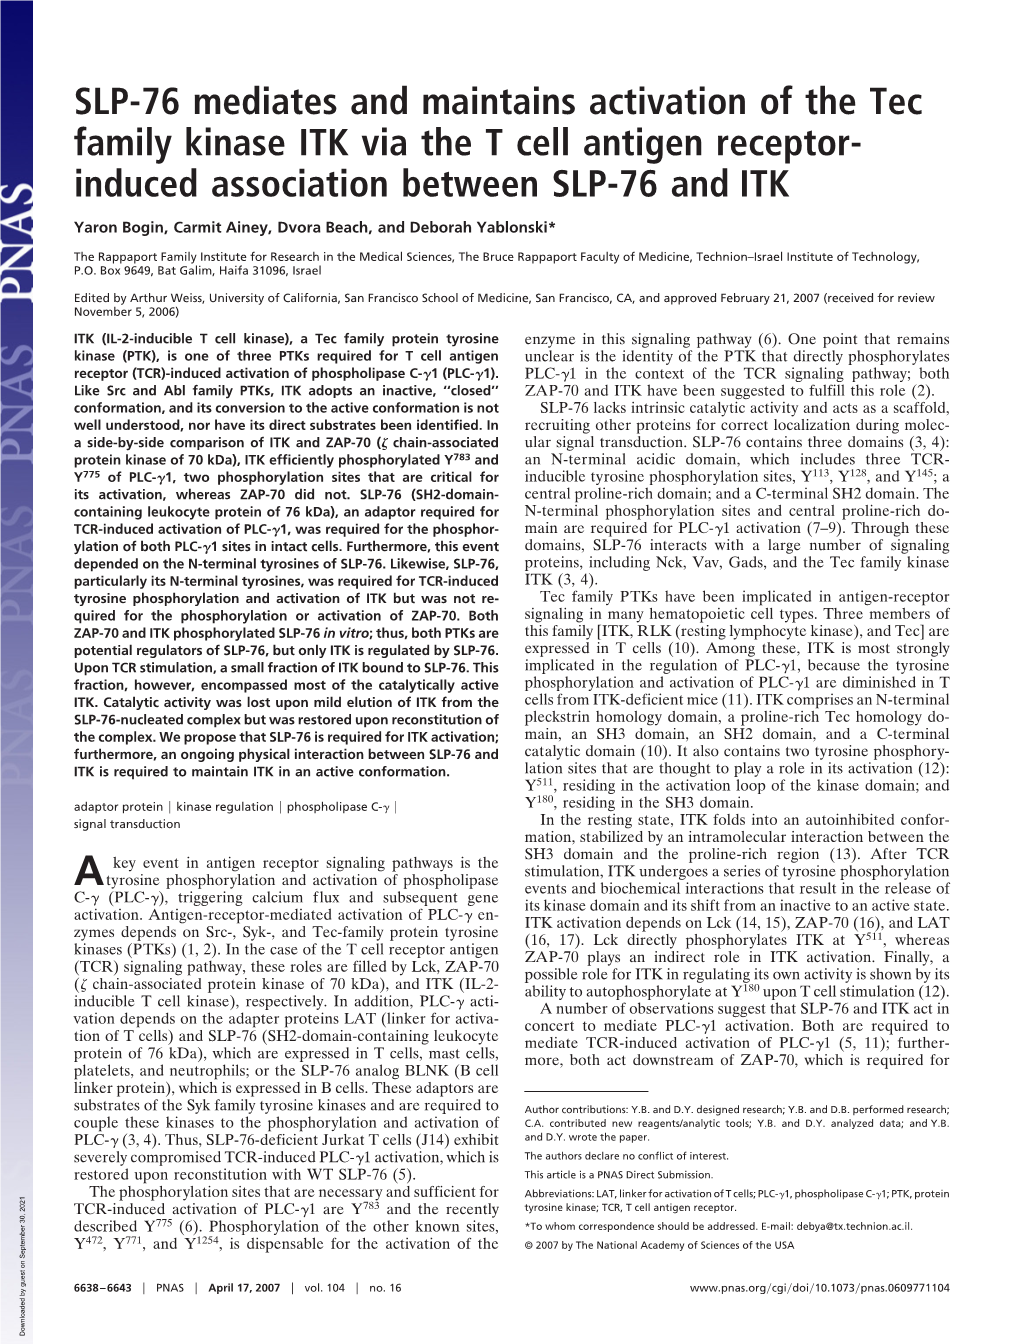 Induced Association Between SLP-76 and ITK